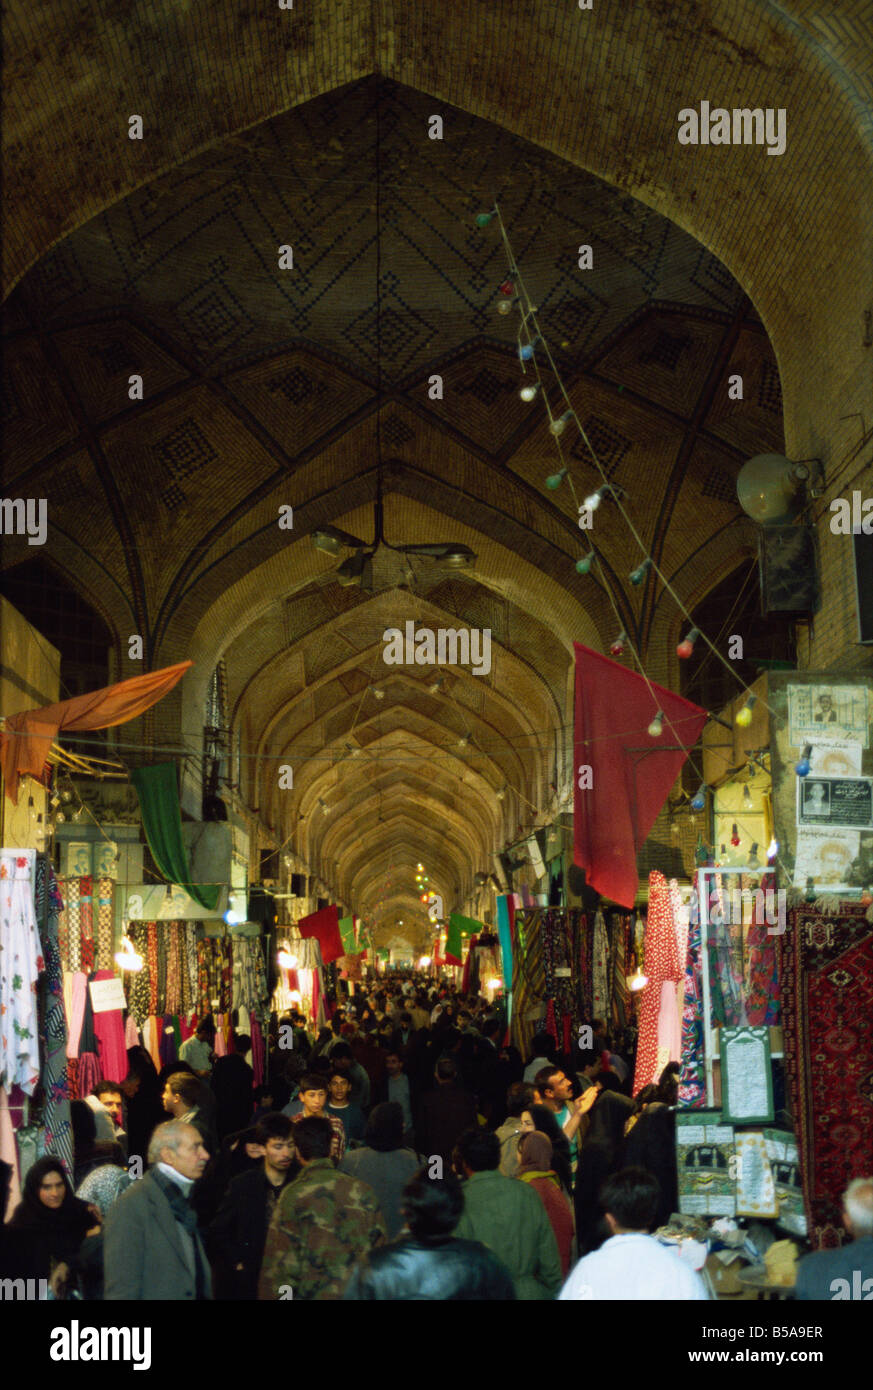 Vakil Bazaar, built by Karim Khan in the 18th century, Shiraz, Iran, Middle East Stock Photo